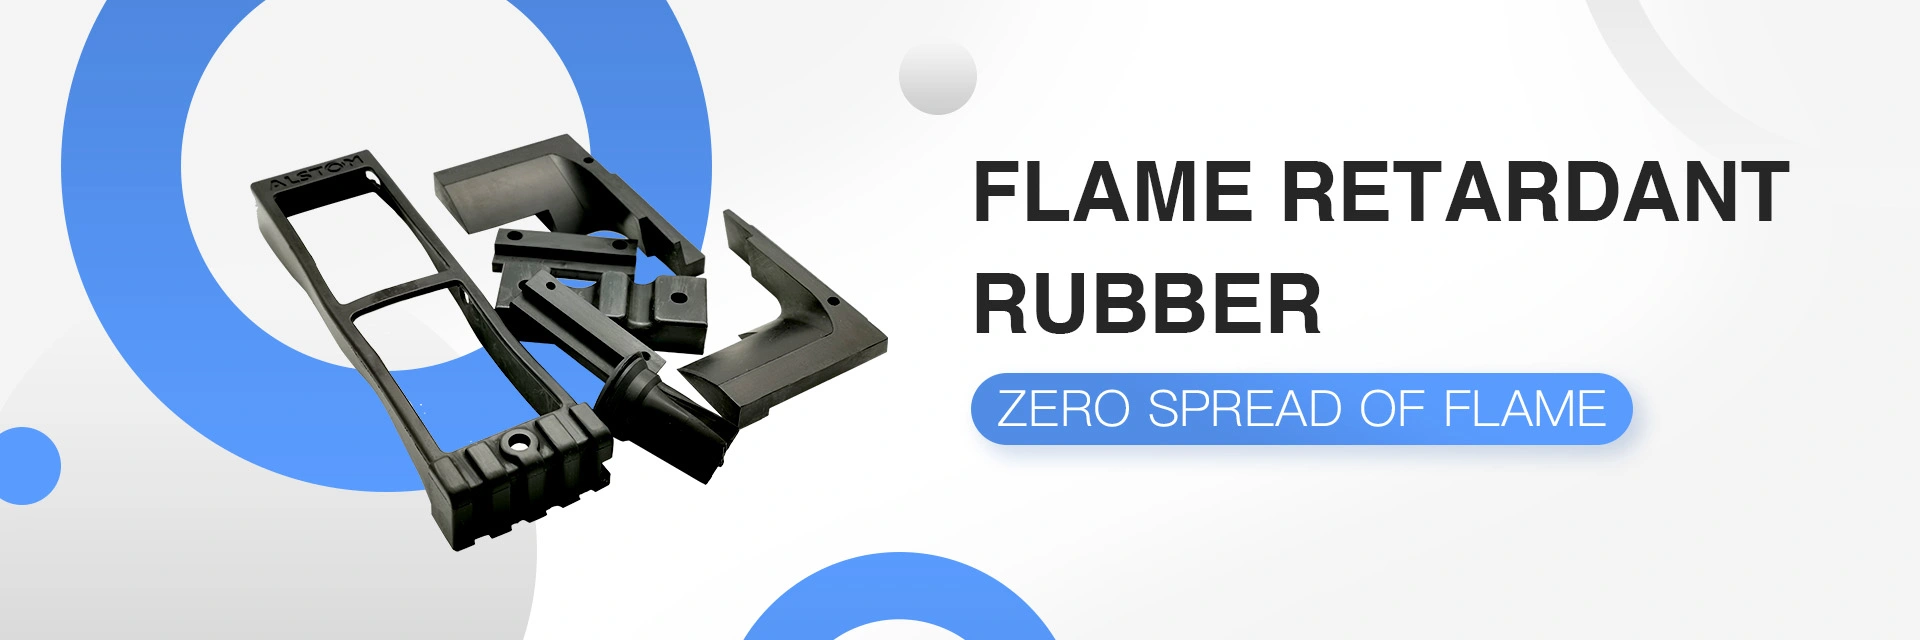 Flame retardant rubber zero spread of flame